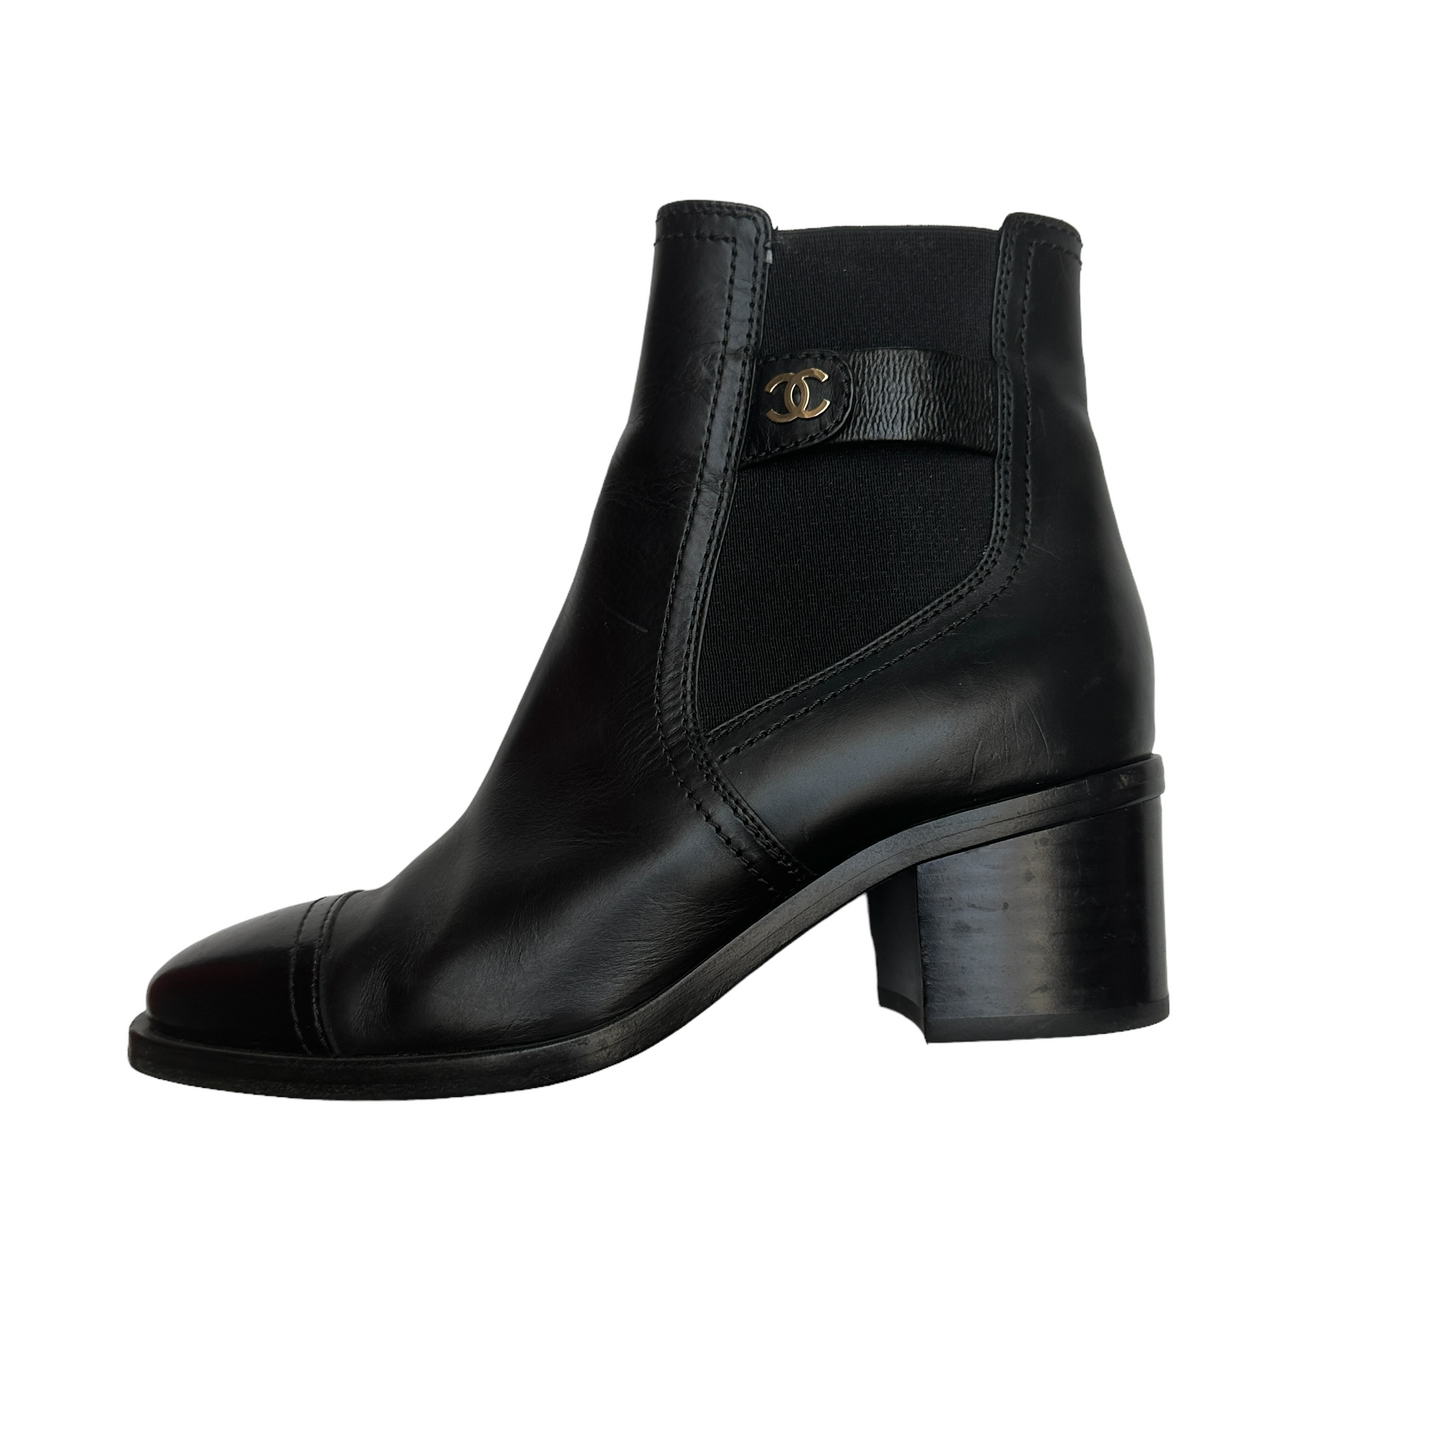 Black Classic Boots - 5.5